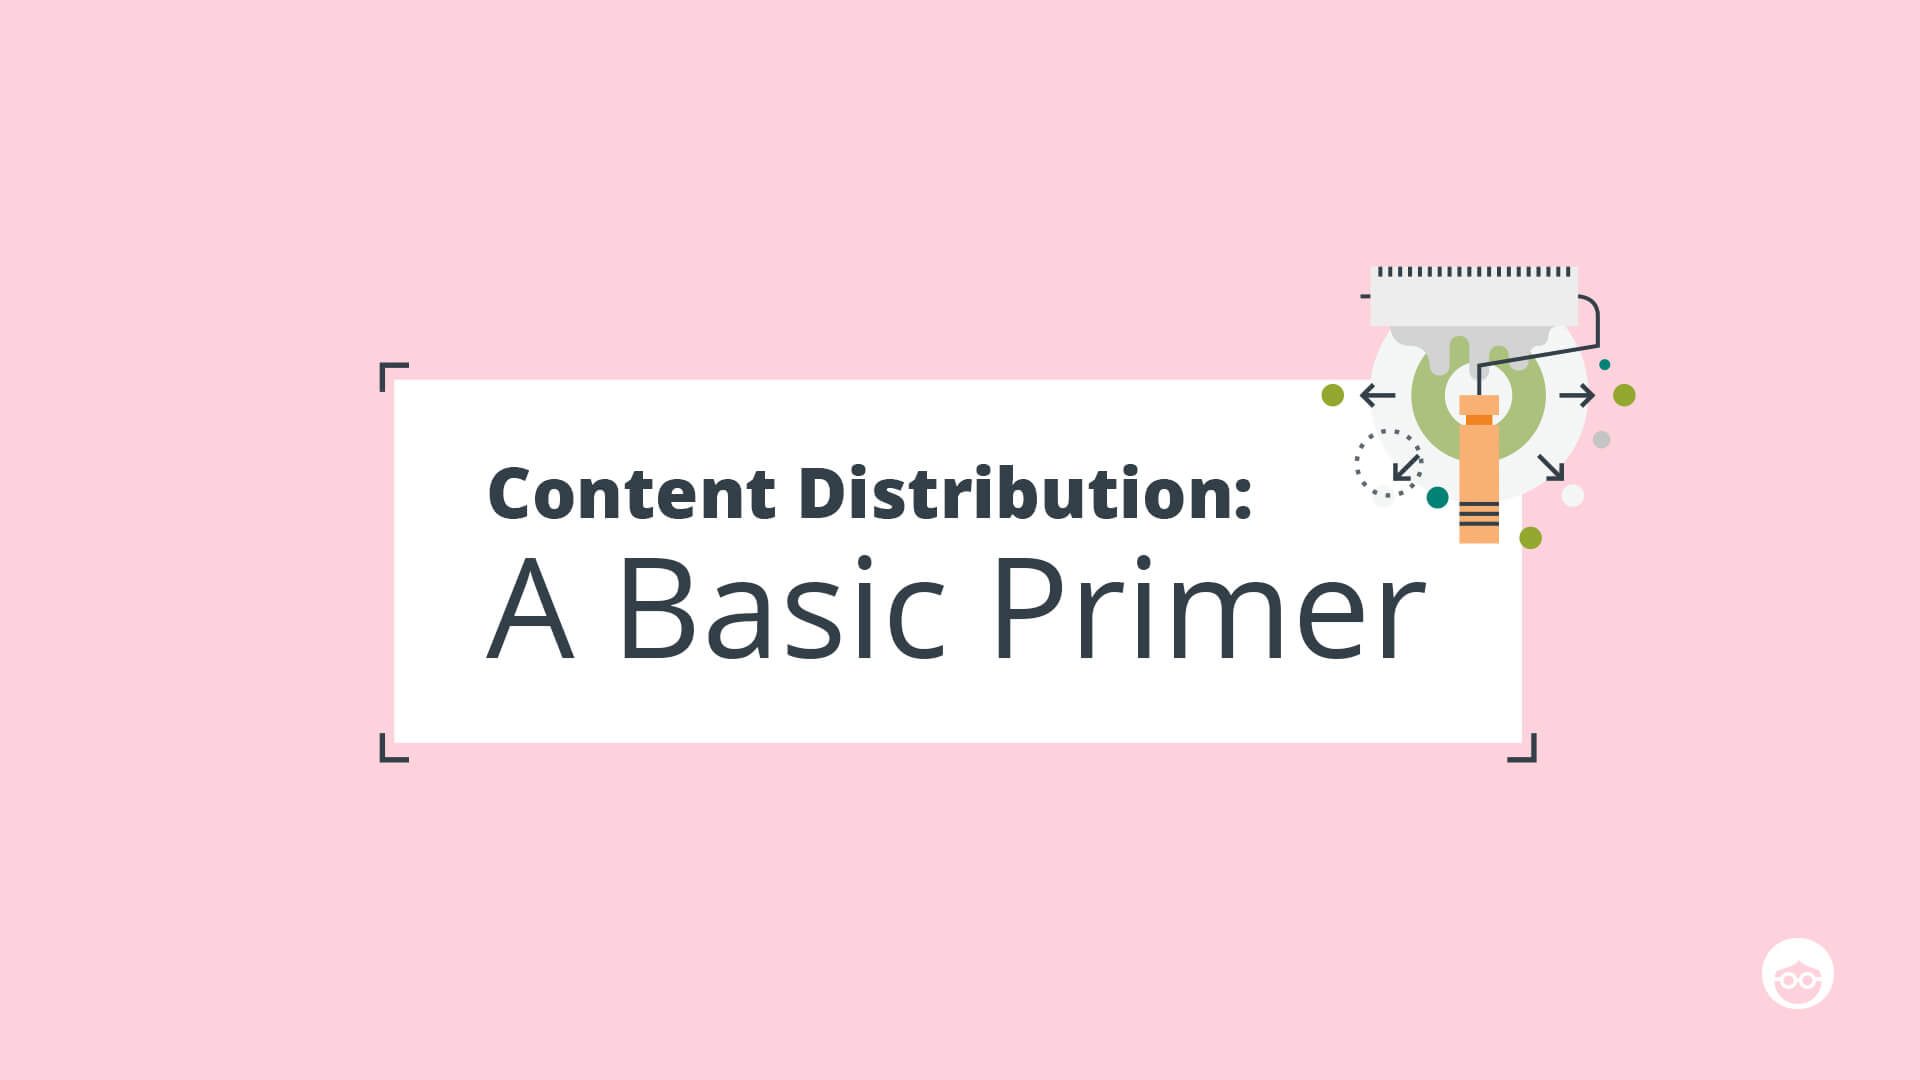 Content Distribution: A Basic Primer